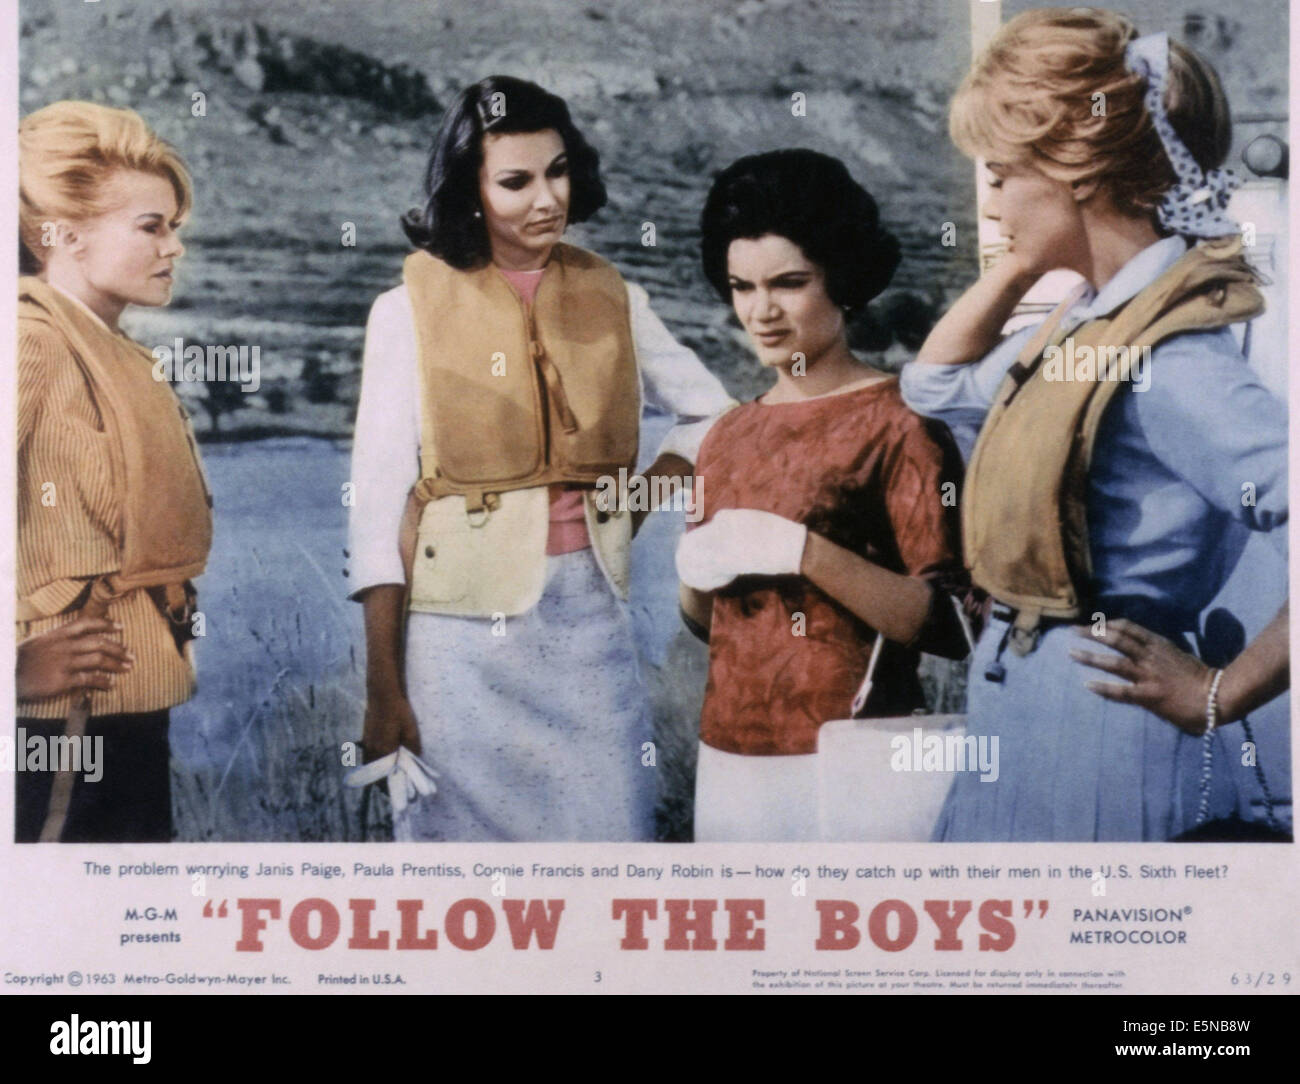 FOLLOW THE BOYS, Dany Robin, Paula Prentiss, Connie Francis, Janis Paige, 1963 Stock Photo